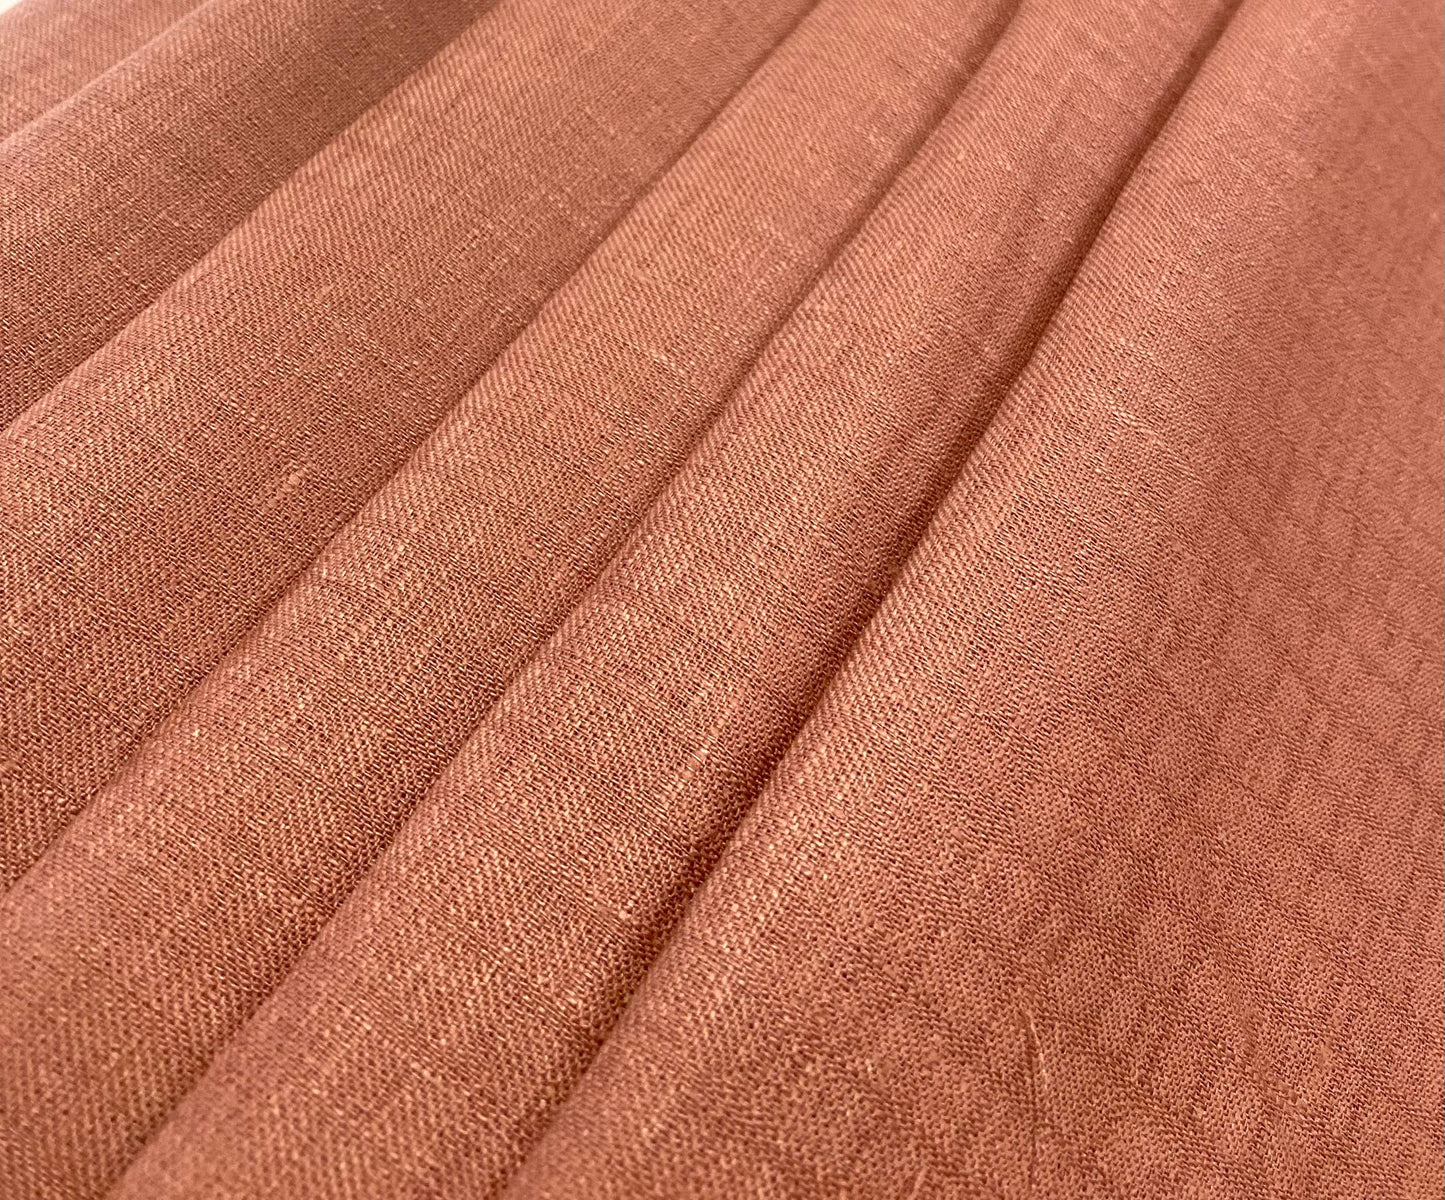 Copper Self Design - Premium Dyed Linen Fabric LG-215